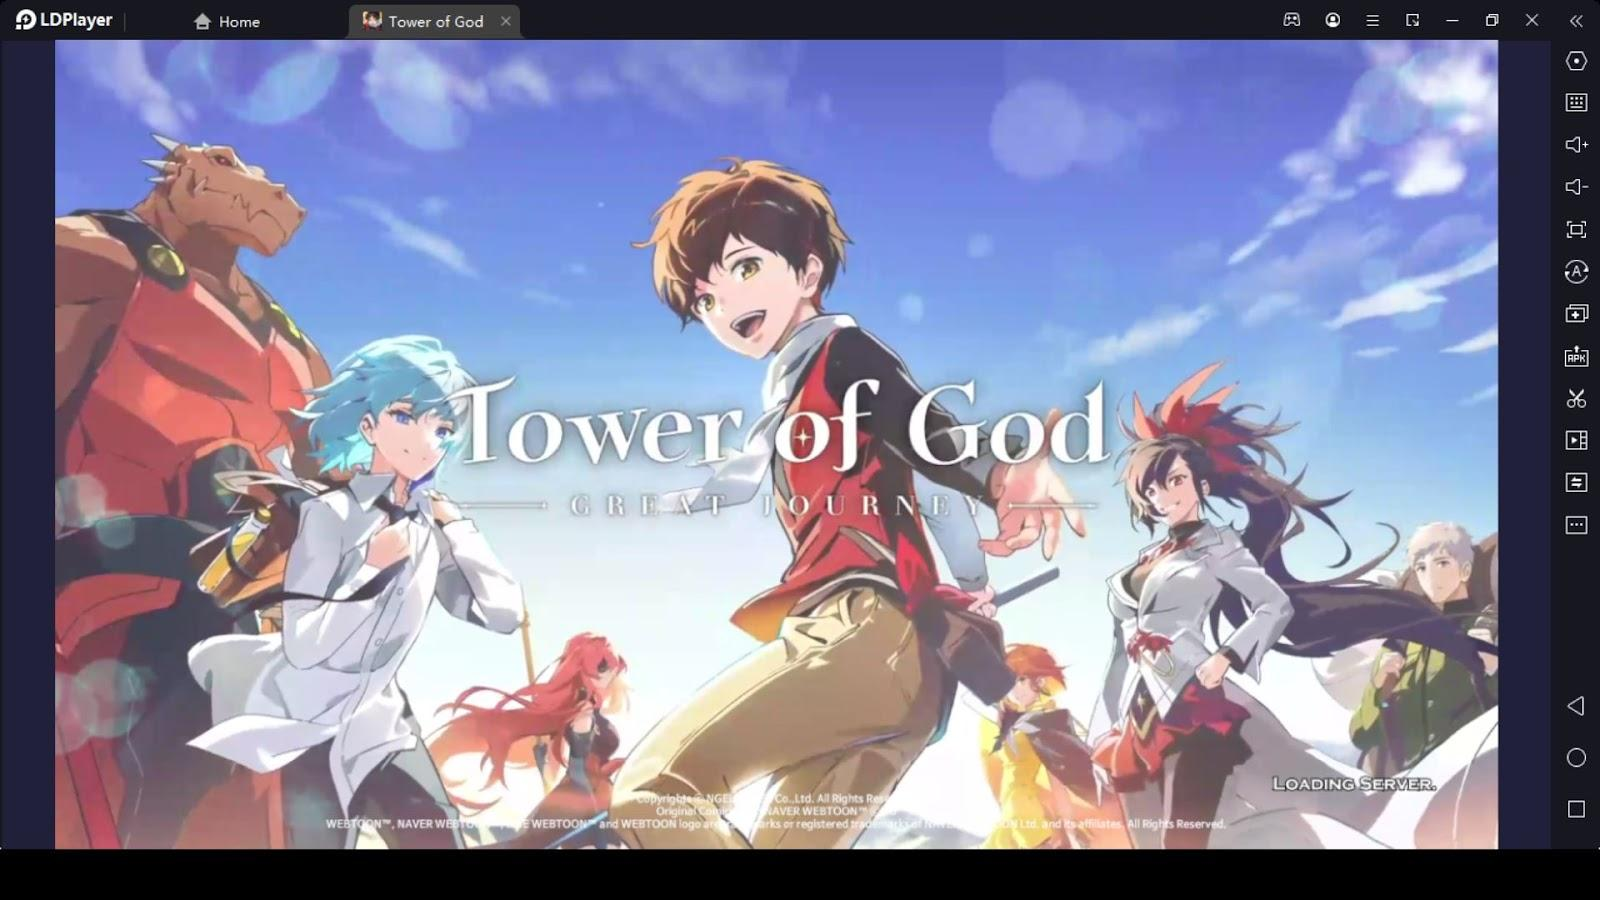 Tower of God – Line Webtoon Turn Mobile Game